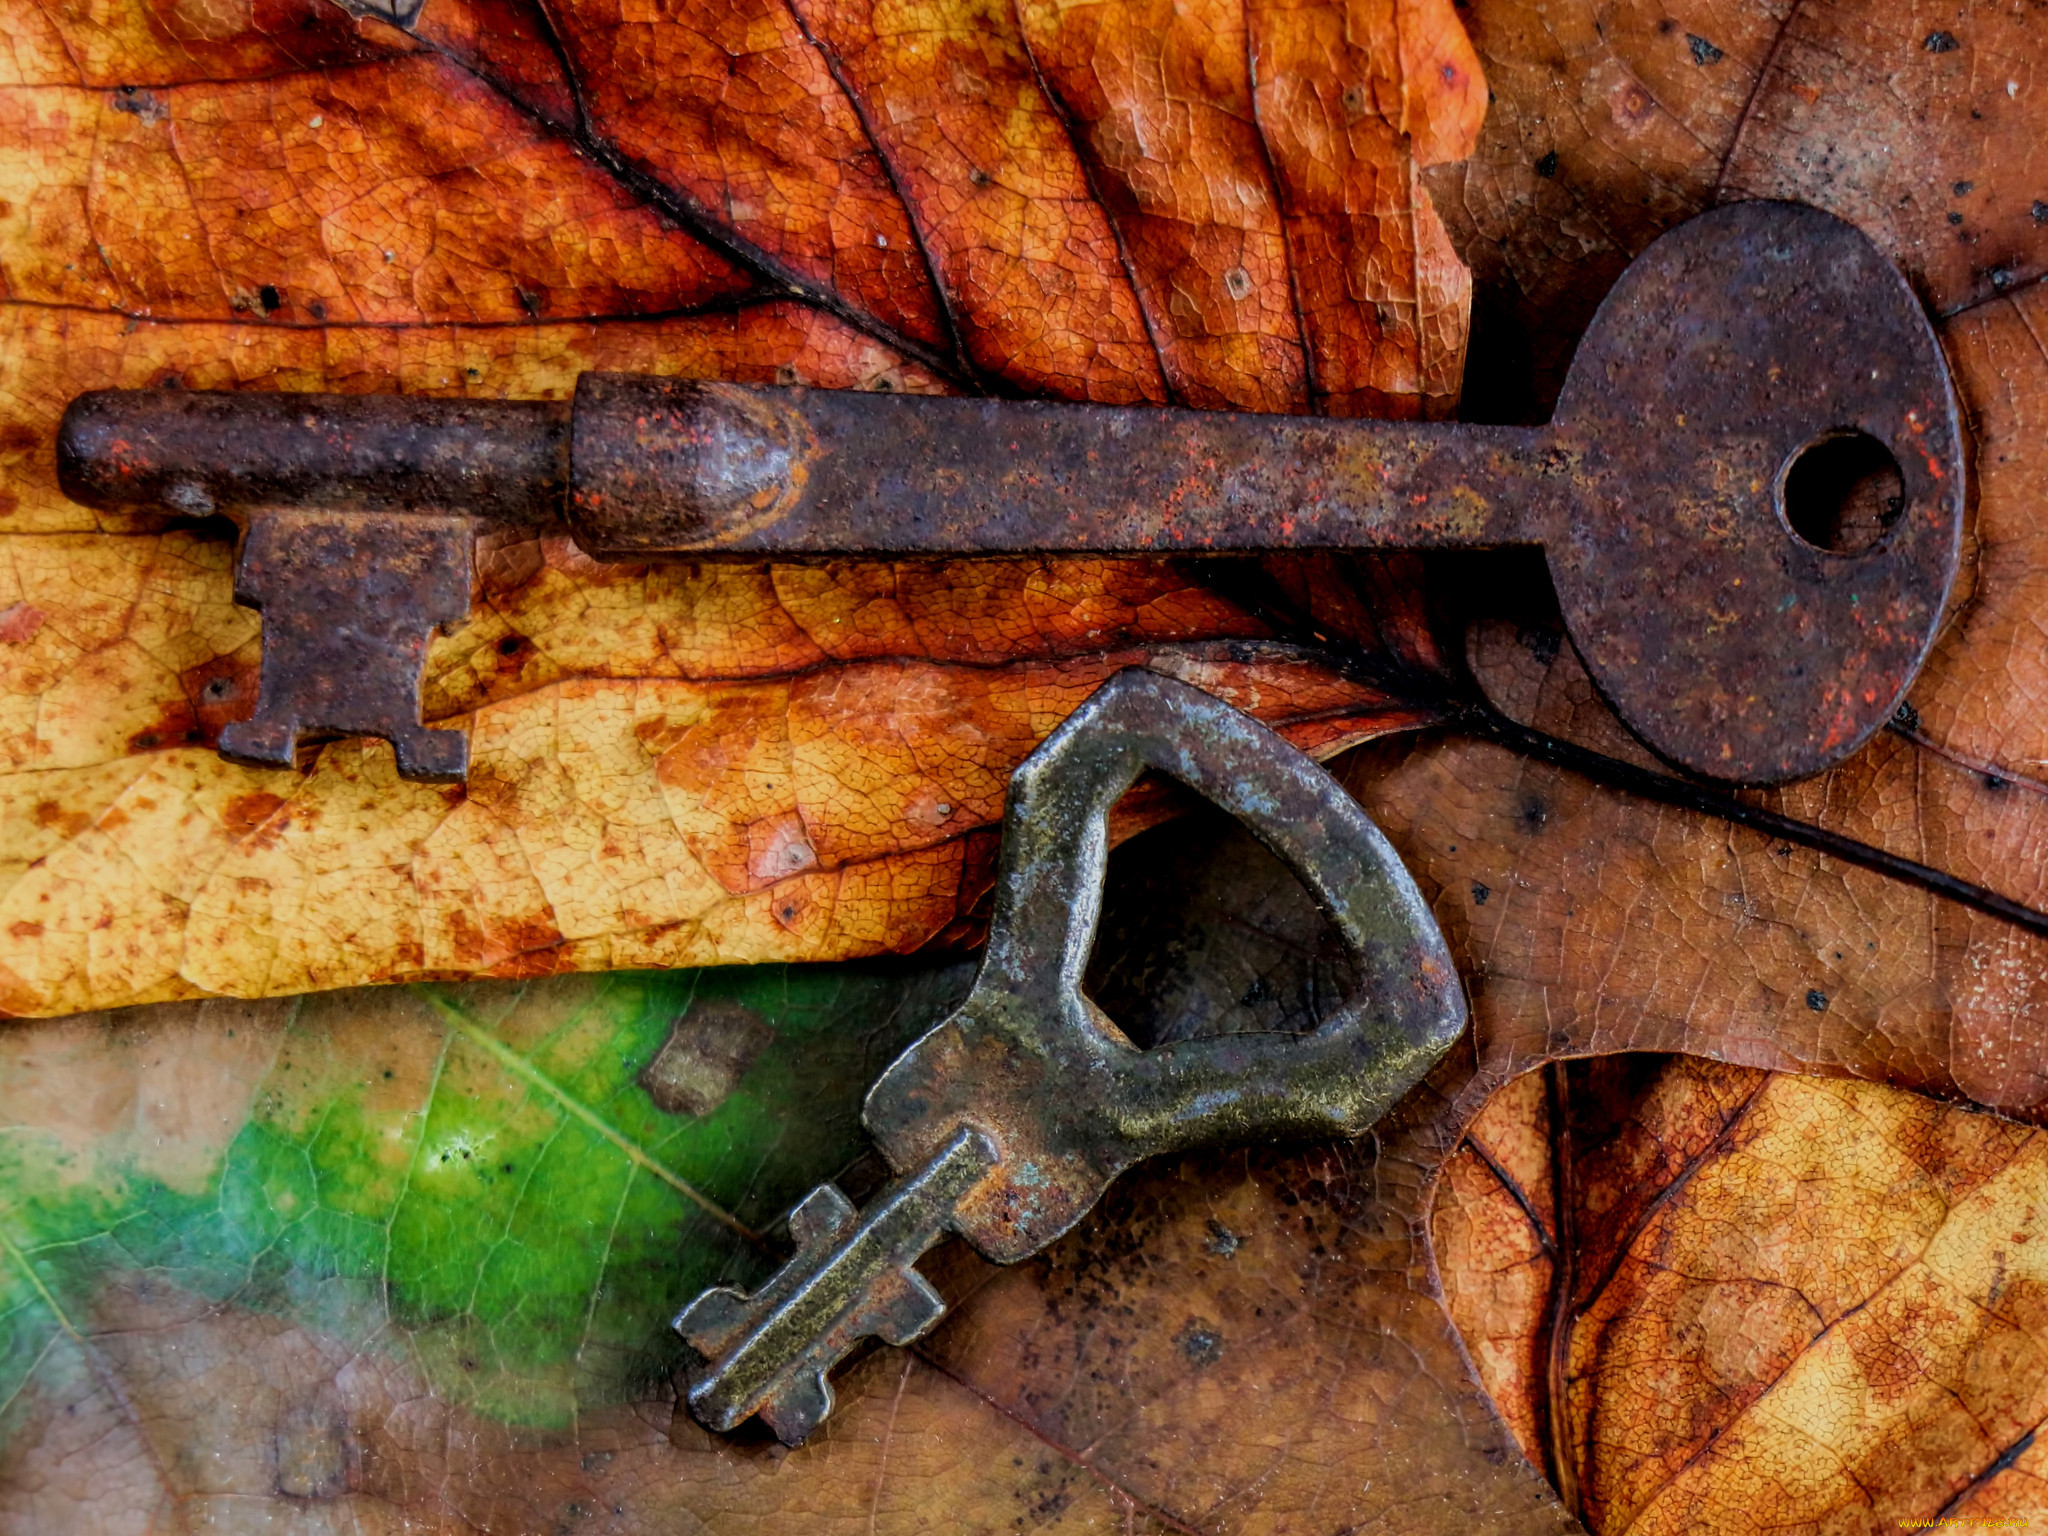 Keys picture. Красивые ключи. Старинный ключ. Красивый старинный ключ. Потеря ключей.